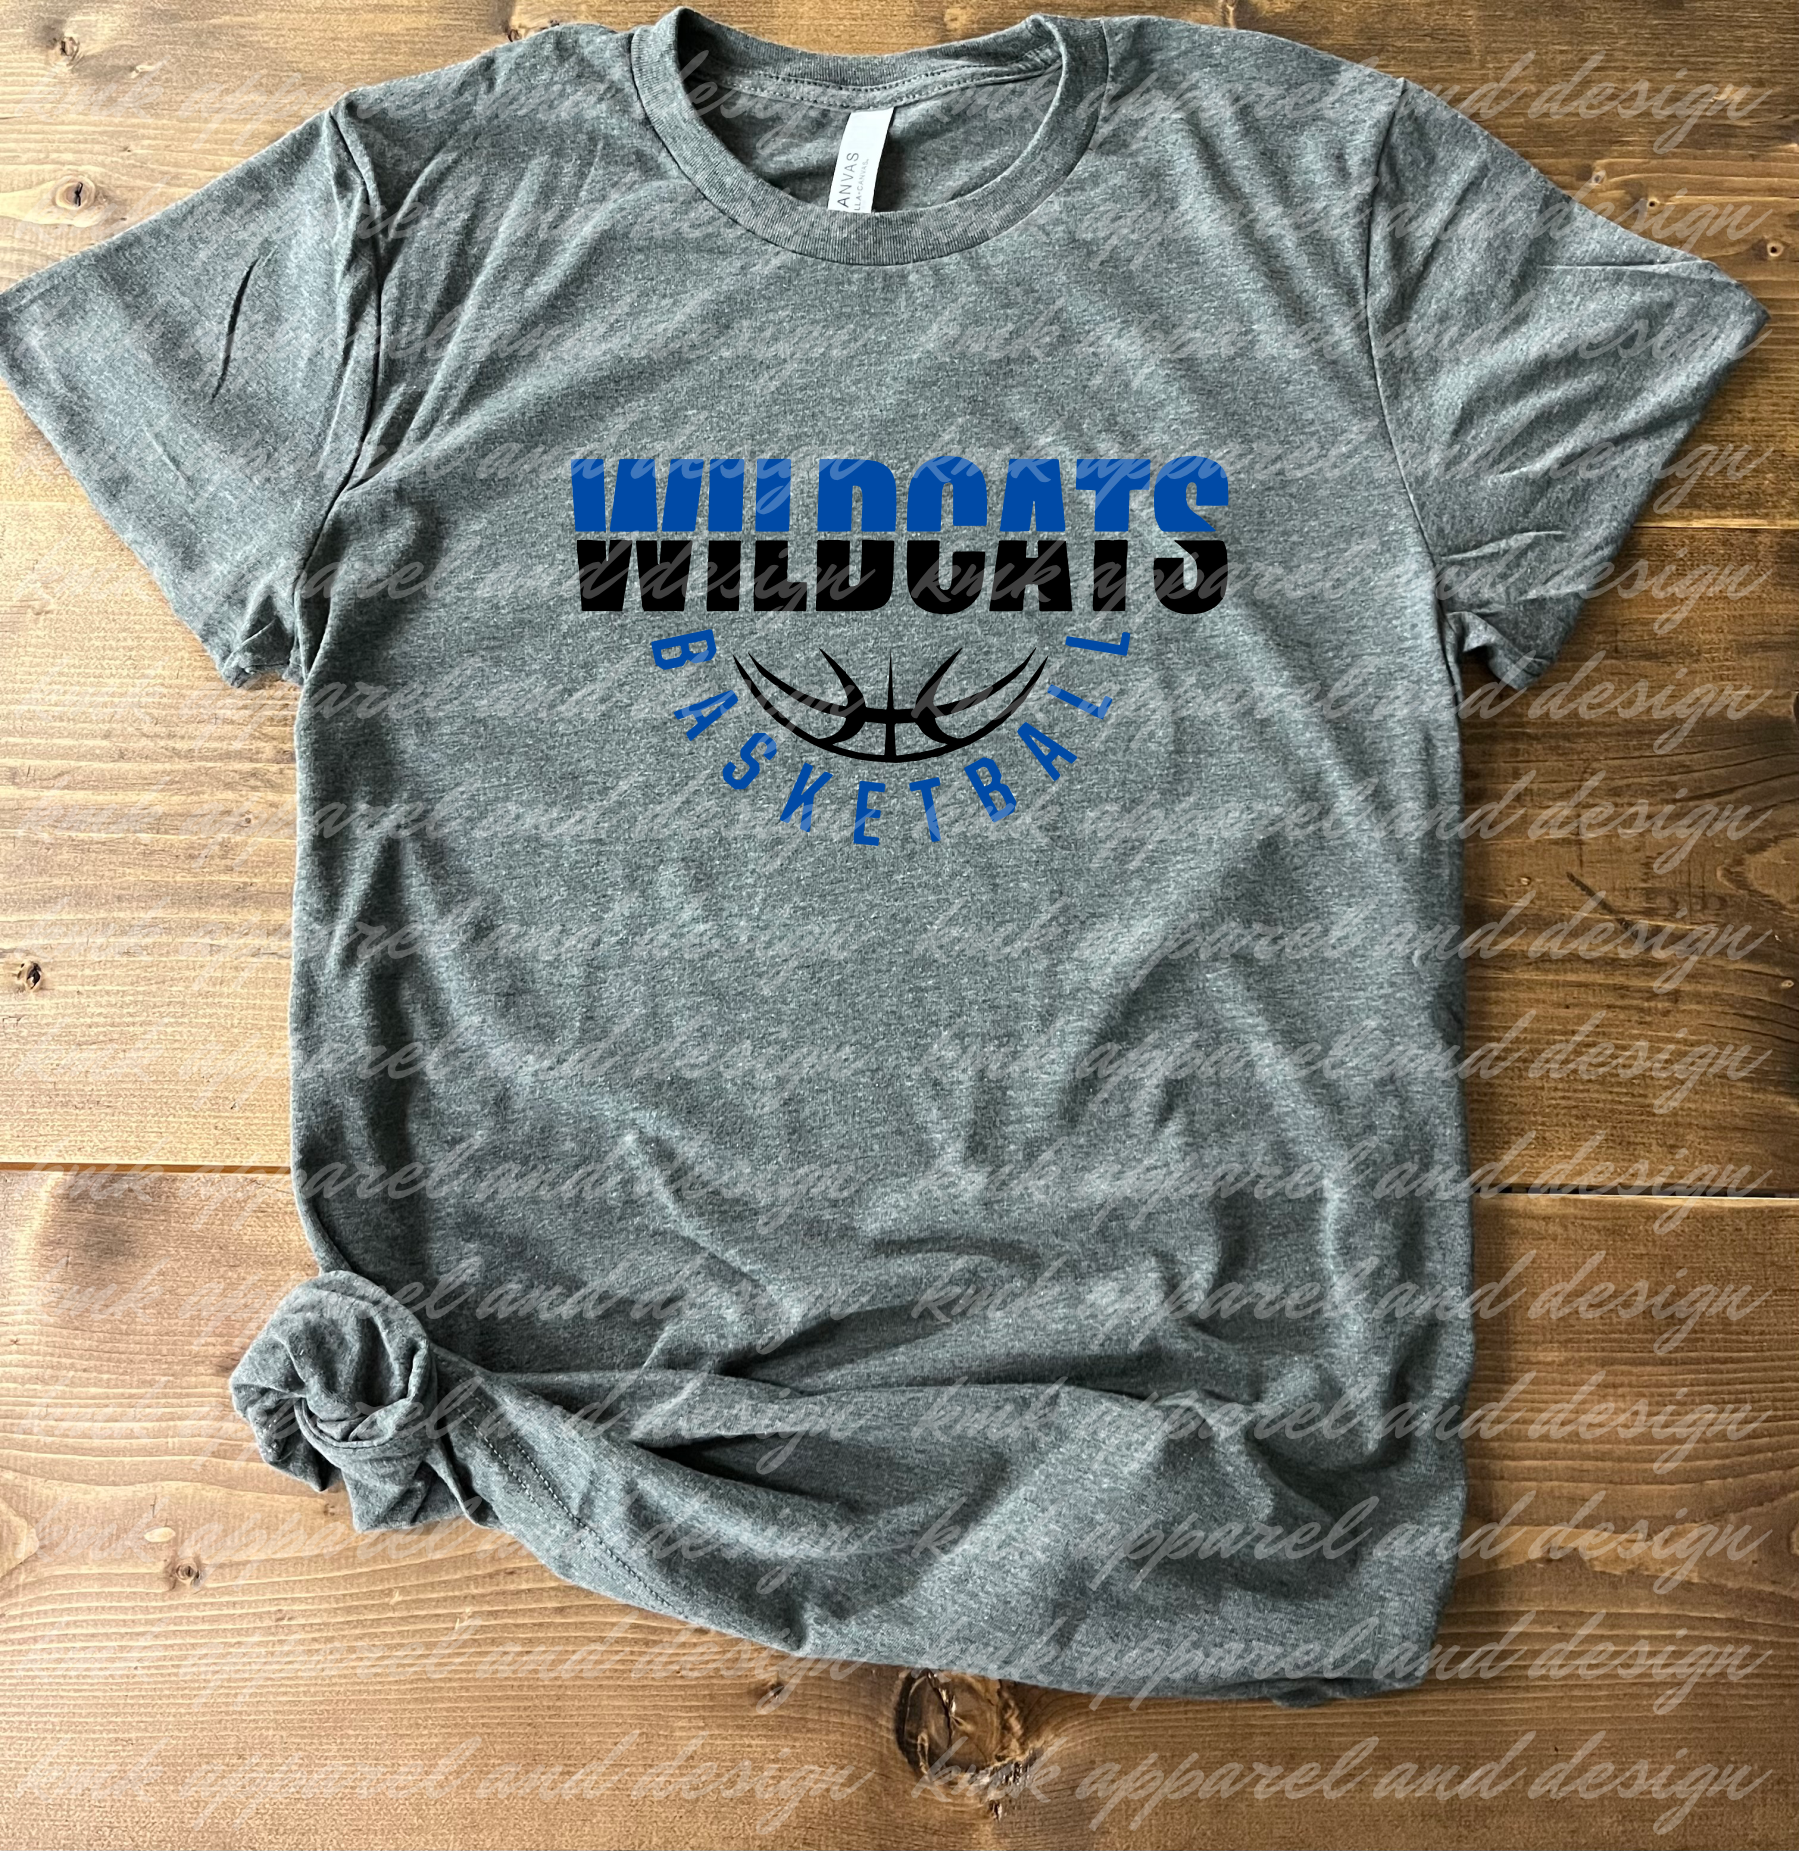 WC Wildcats Split Basketball (+ options)